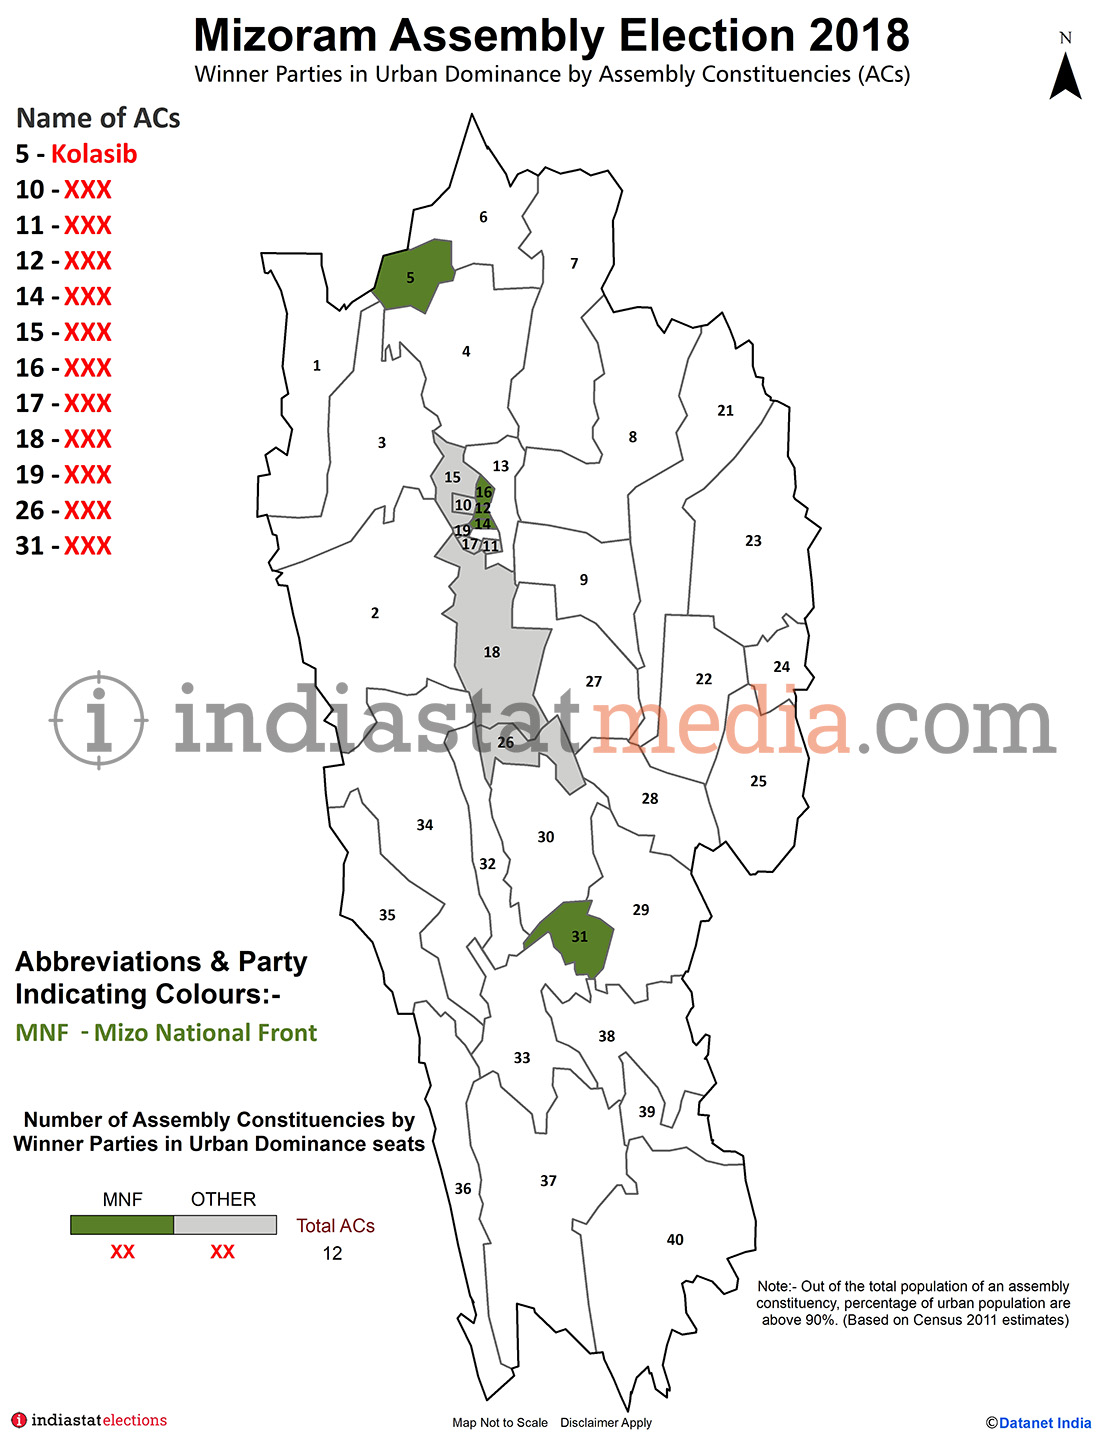 Winner Parties in Urban Dominance Constituencies in Mizoram (Assembly Election - 2018)